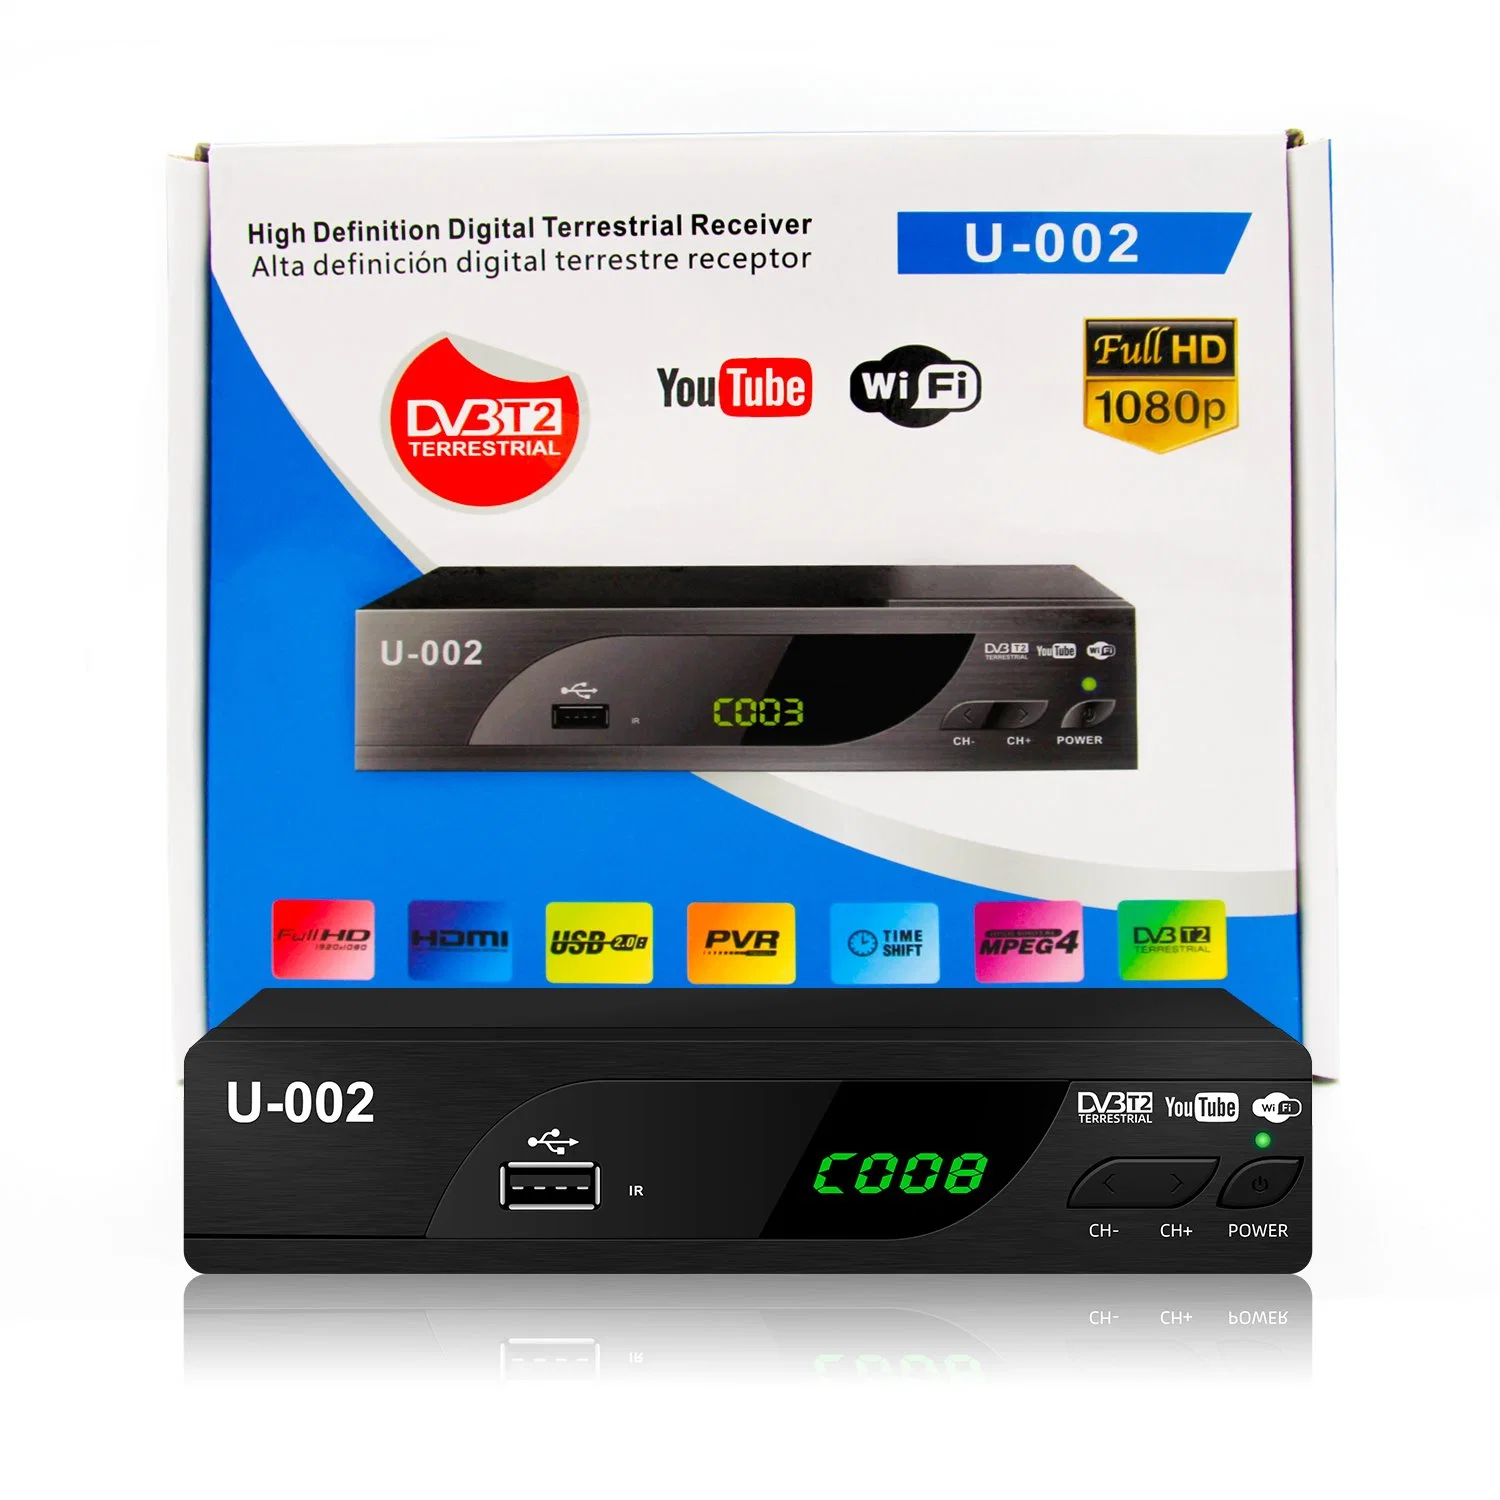 Sunplus 1509c HD H. 264 MPEG-4 DVB-T2 receptor decodificador.